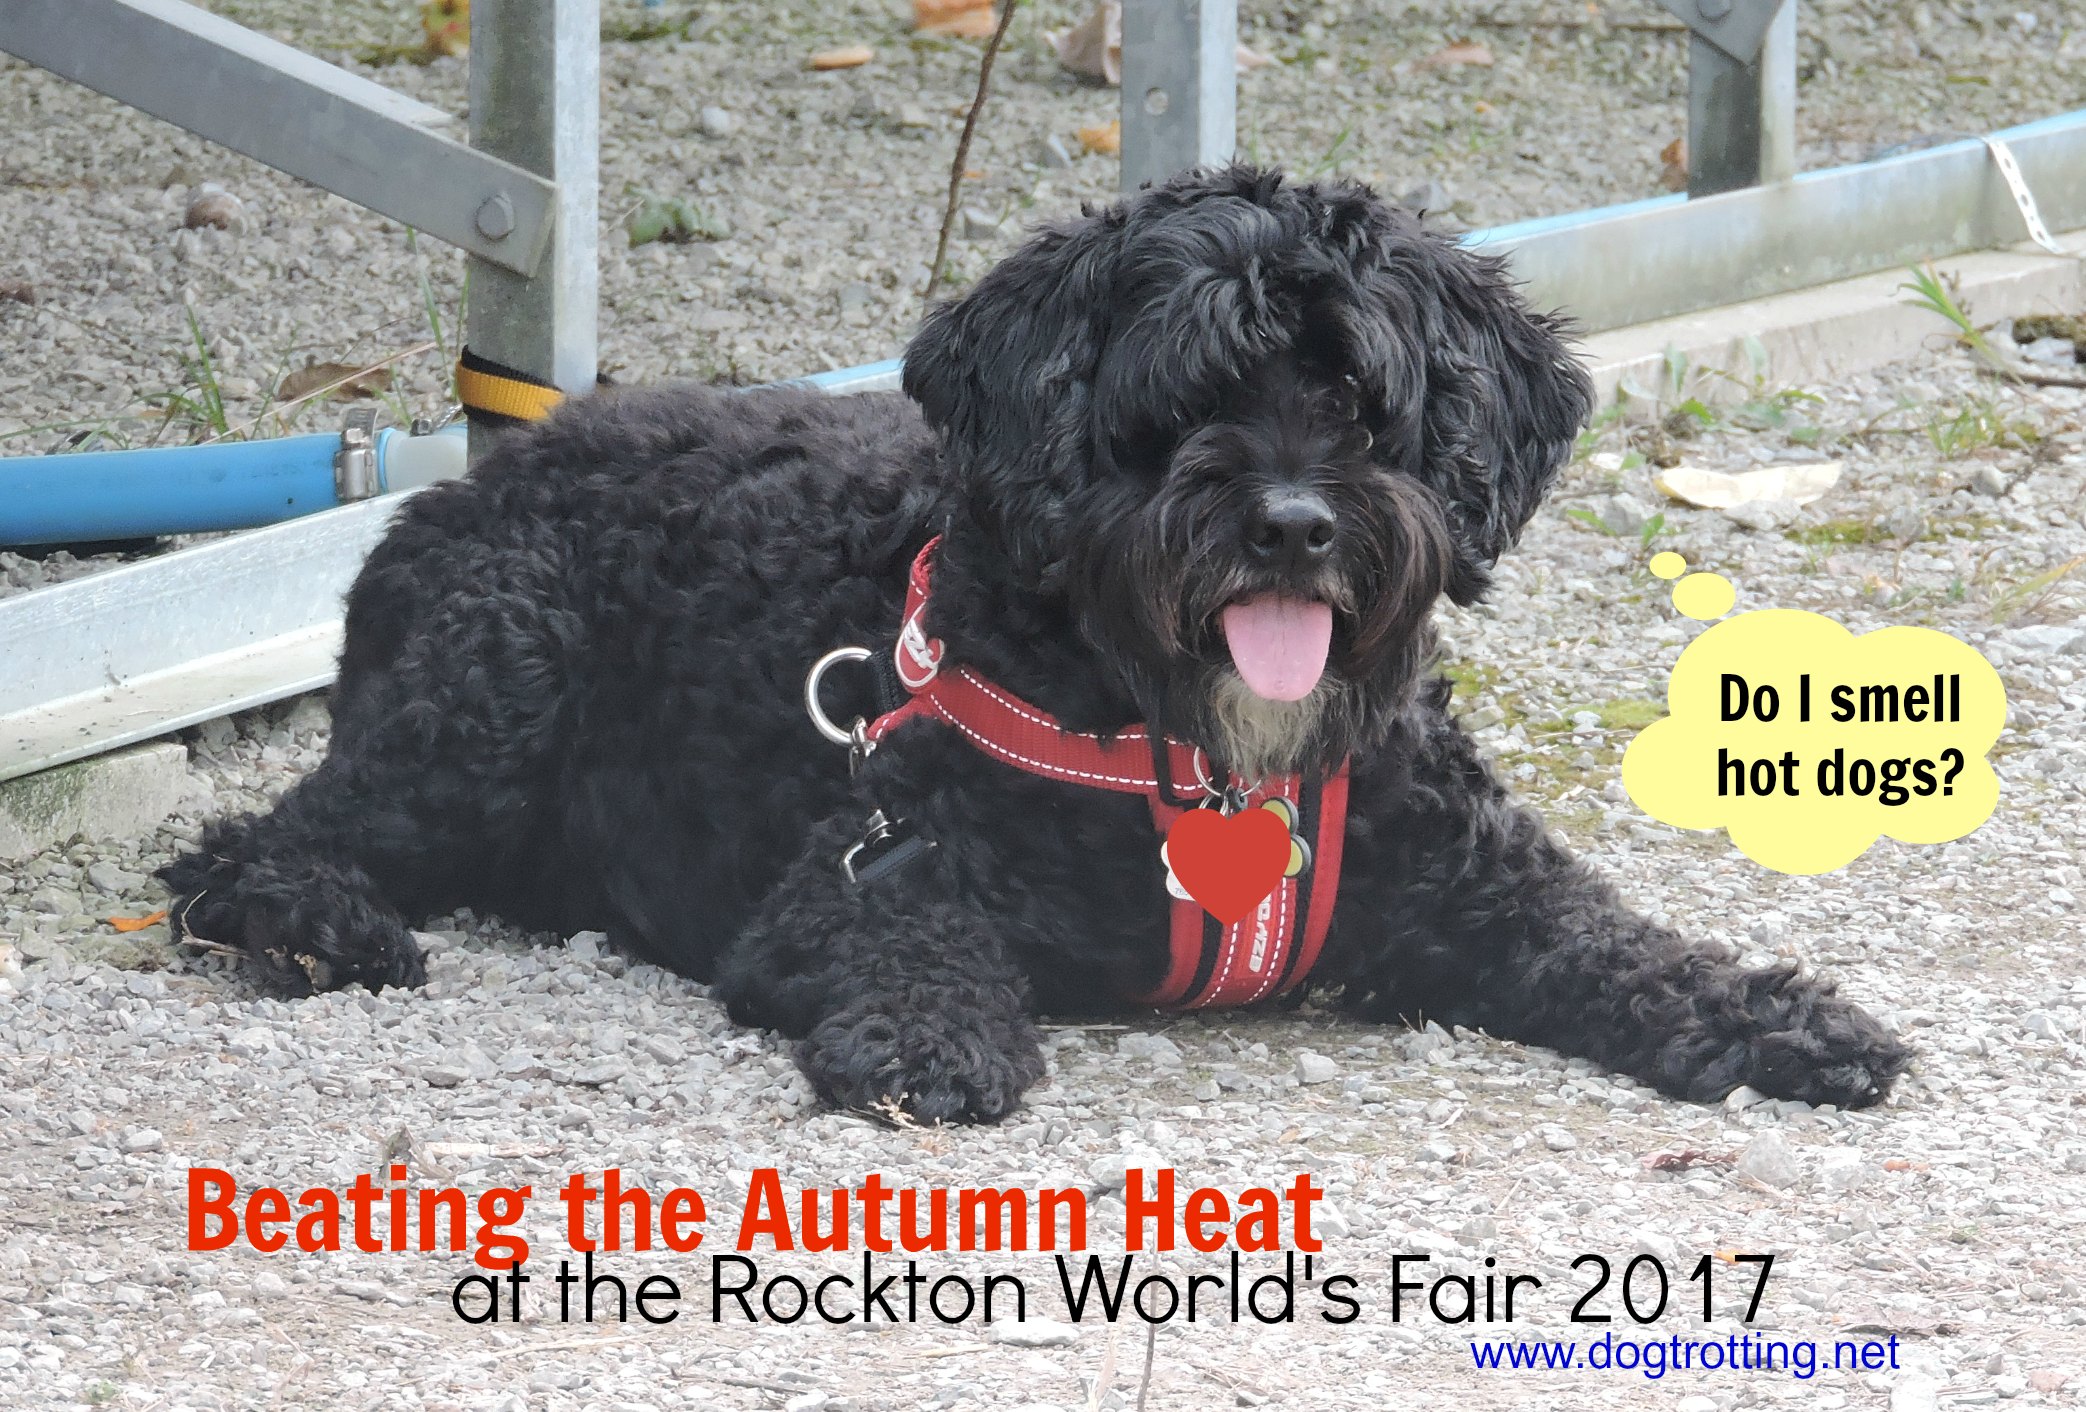 Dog at Rockton World's Fair 2017 dogtrotting.net